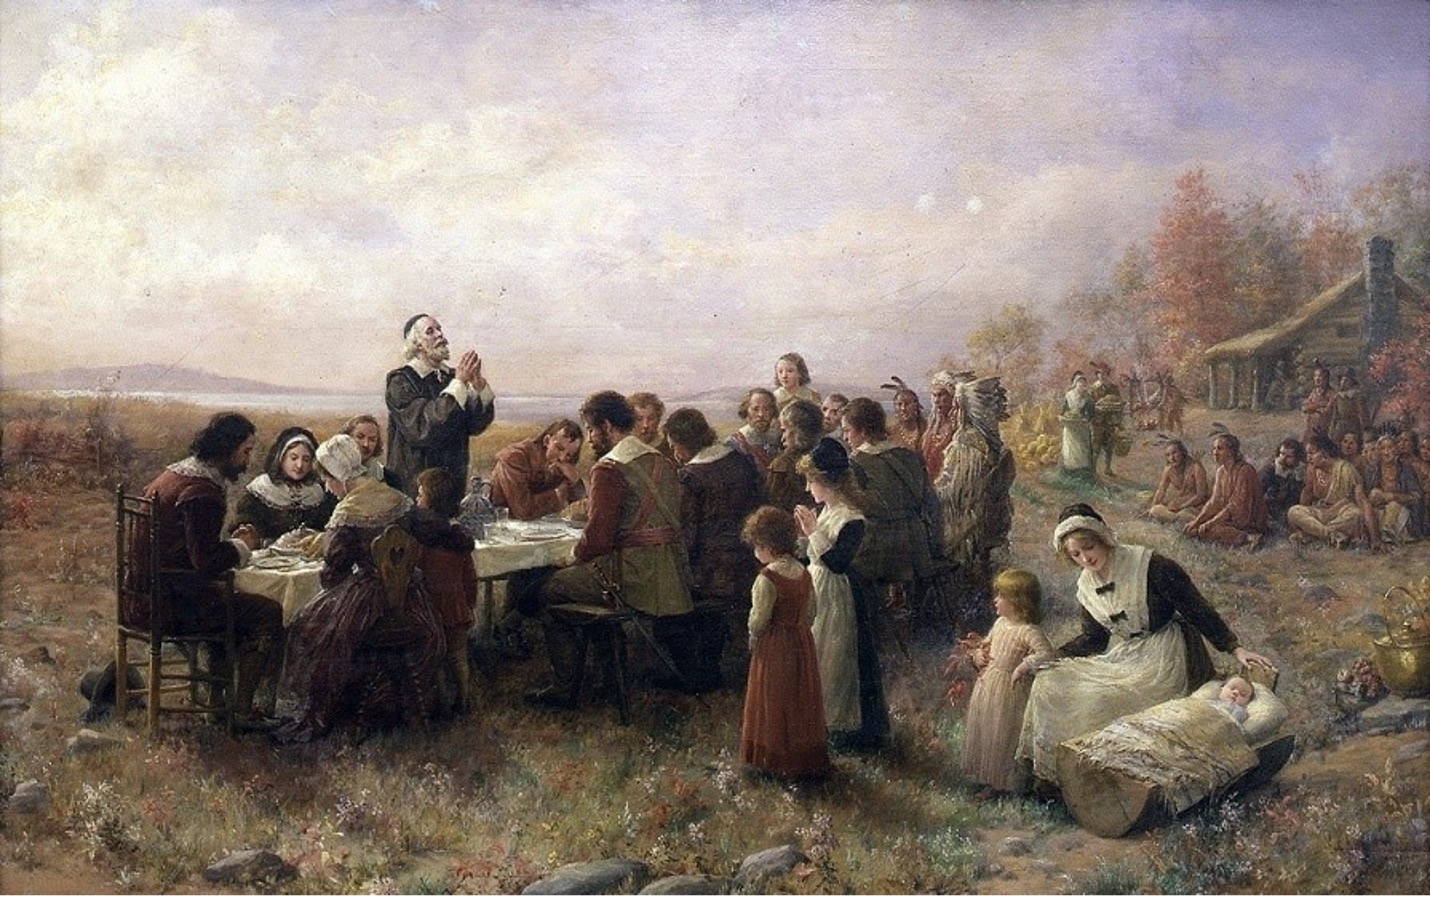 A Pilgrim man stands thanking God at their first Thanksgiving dinner